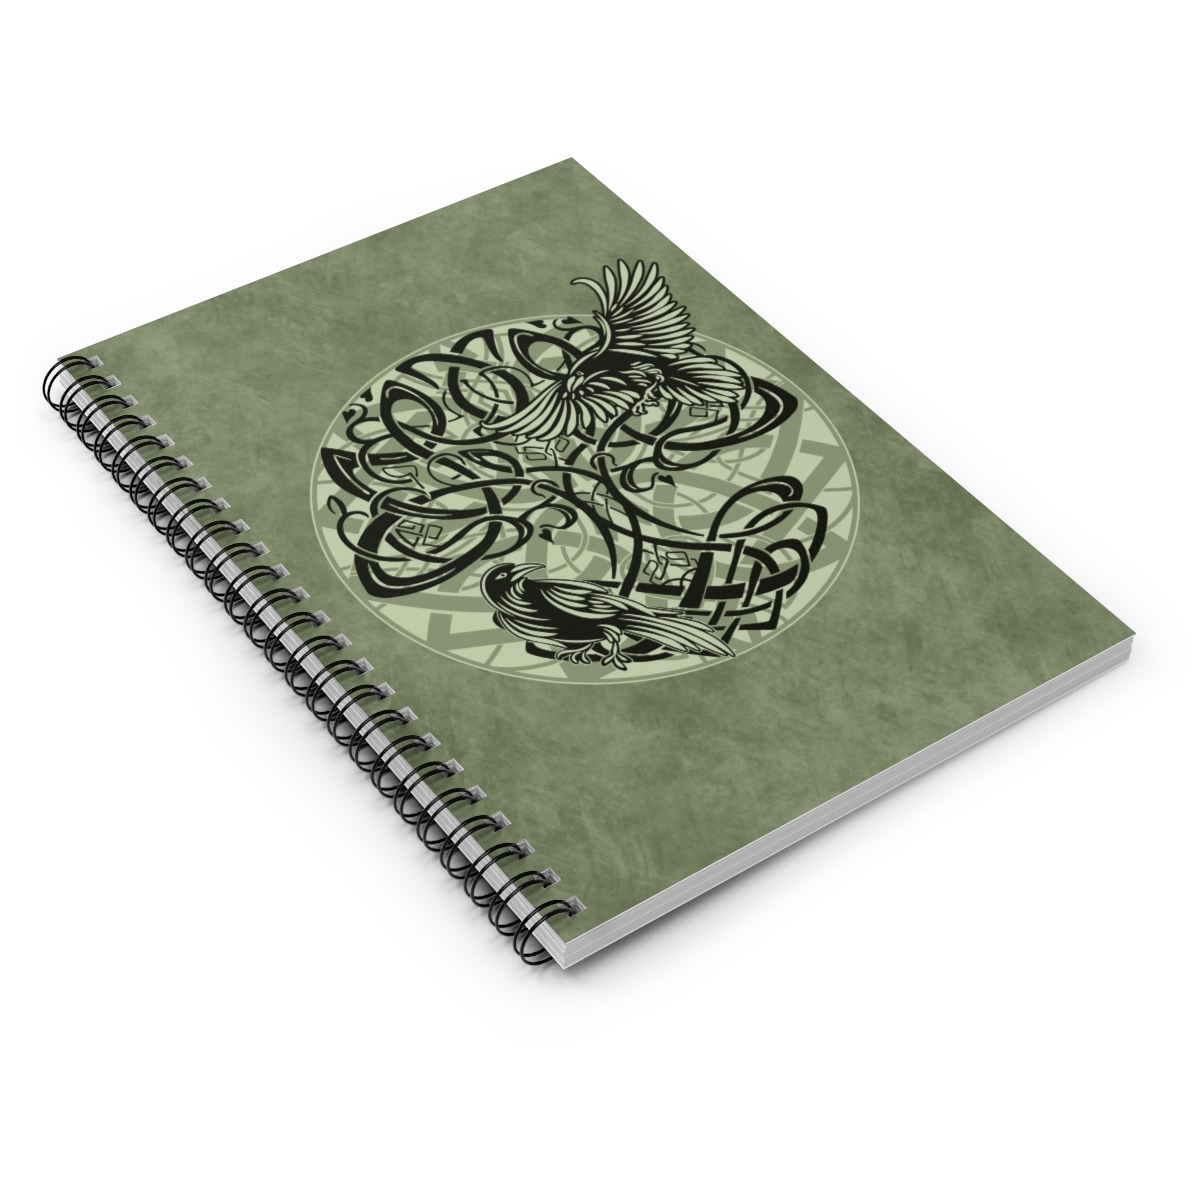 Green Yggdrasil Ravens Spiral Notebook